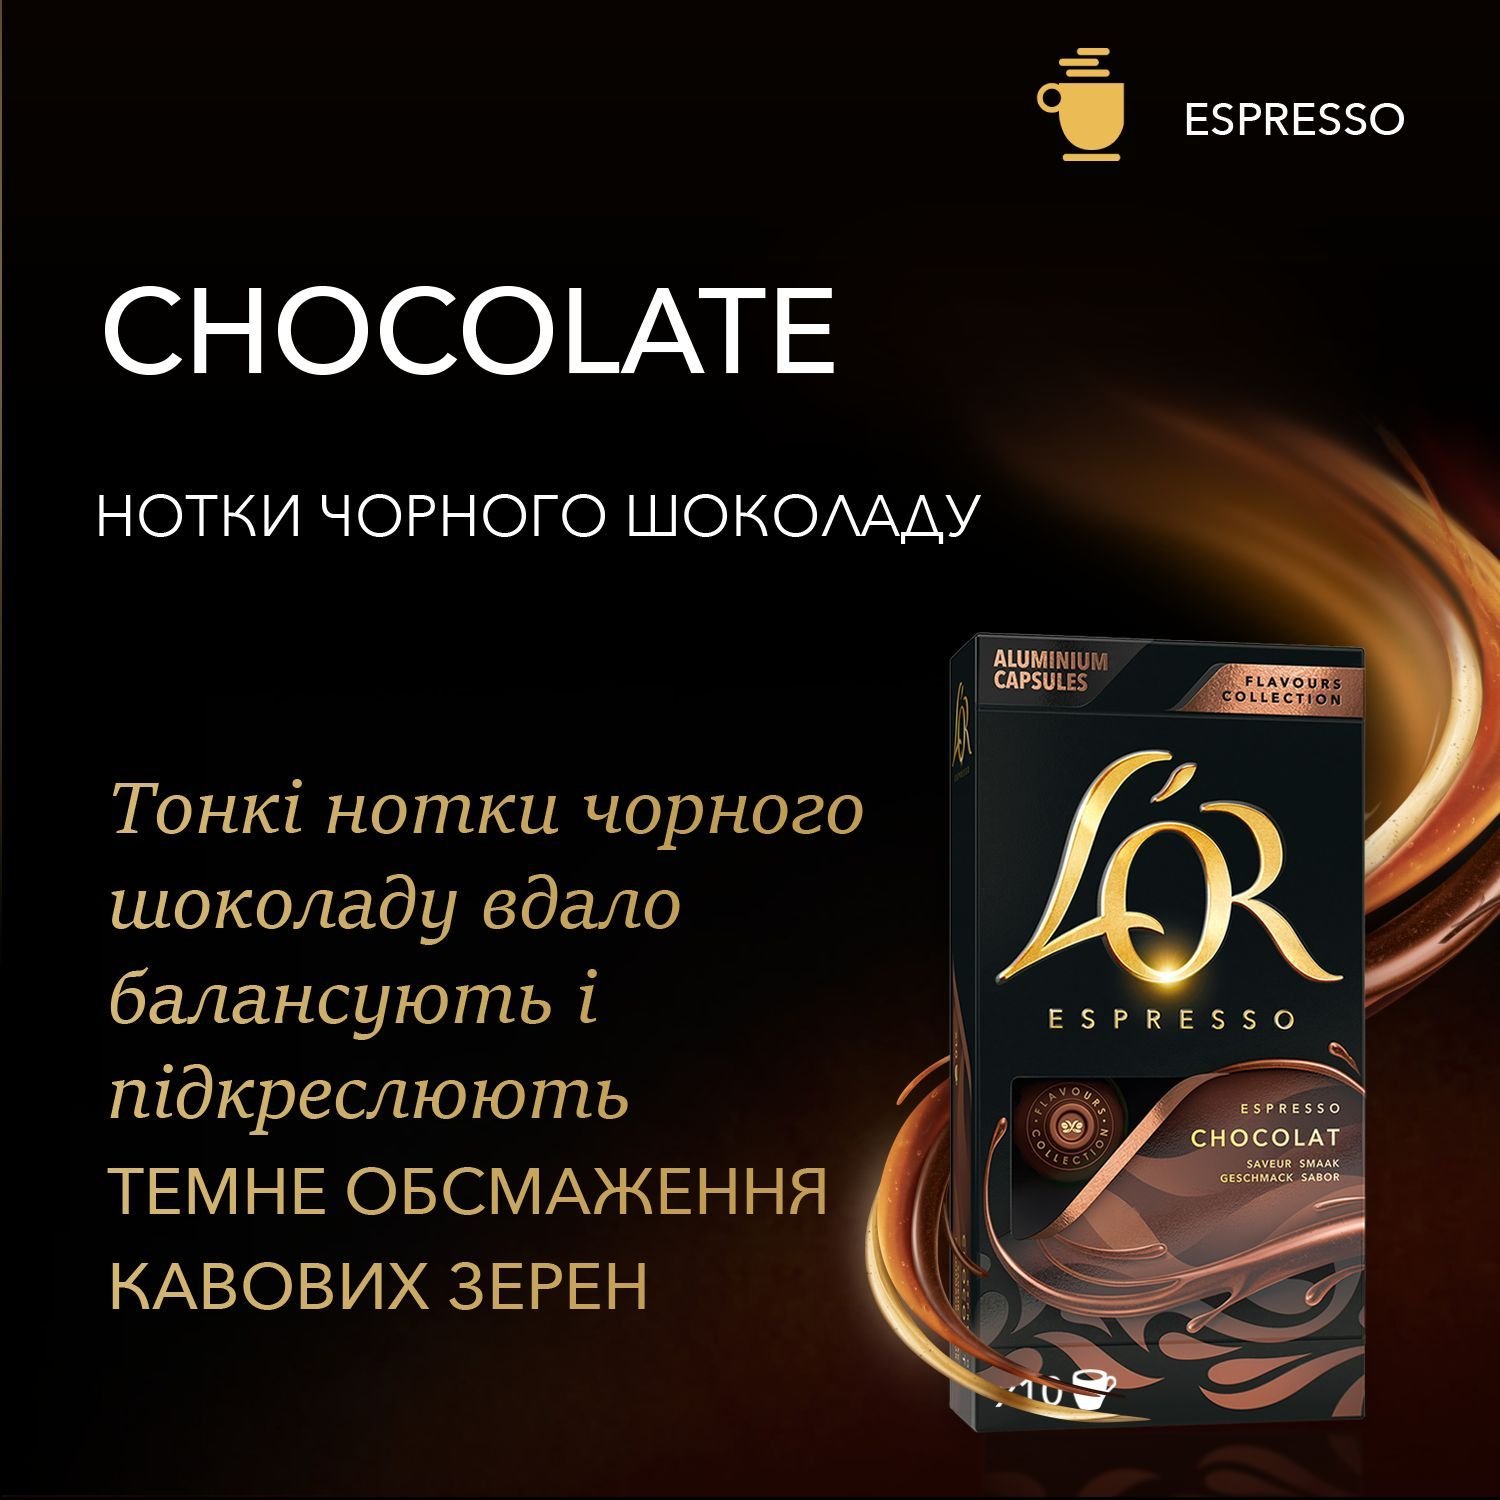 Кофе молотый L'OR Espresso Chocolate 100% Арабика в капсулах 10 шт. 52 г - фото 2